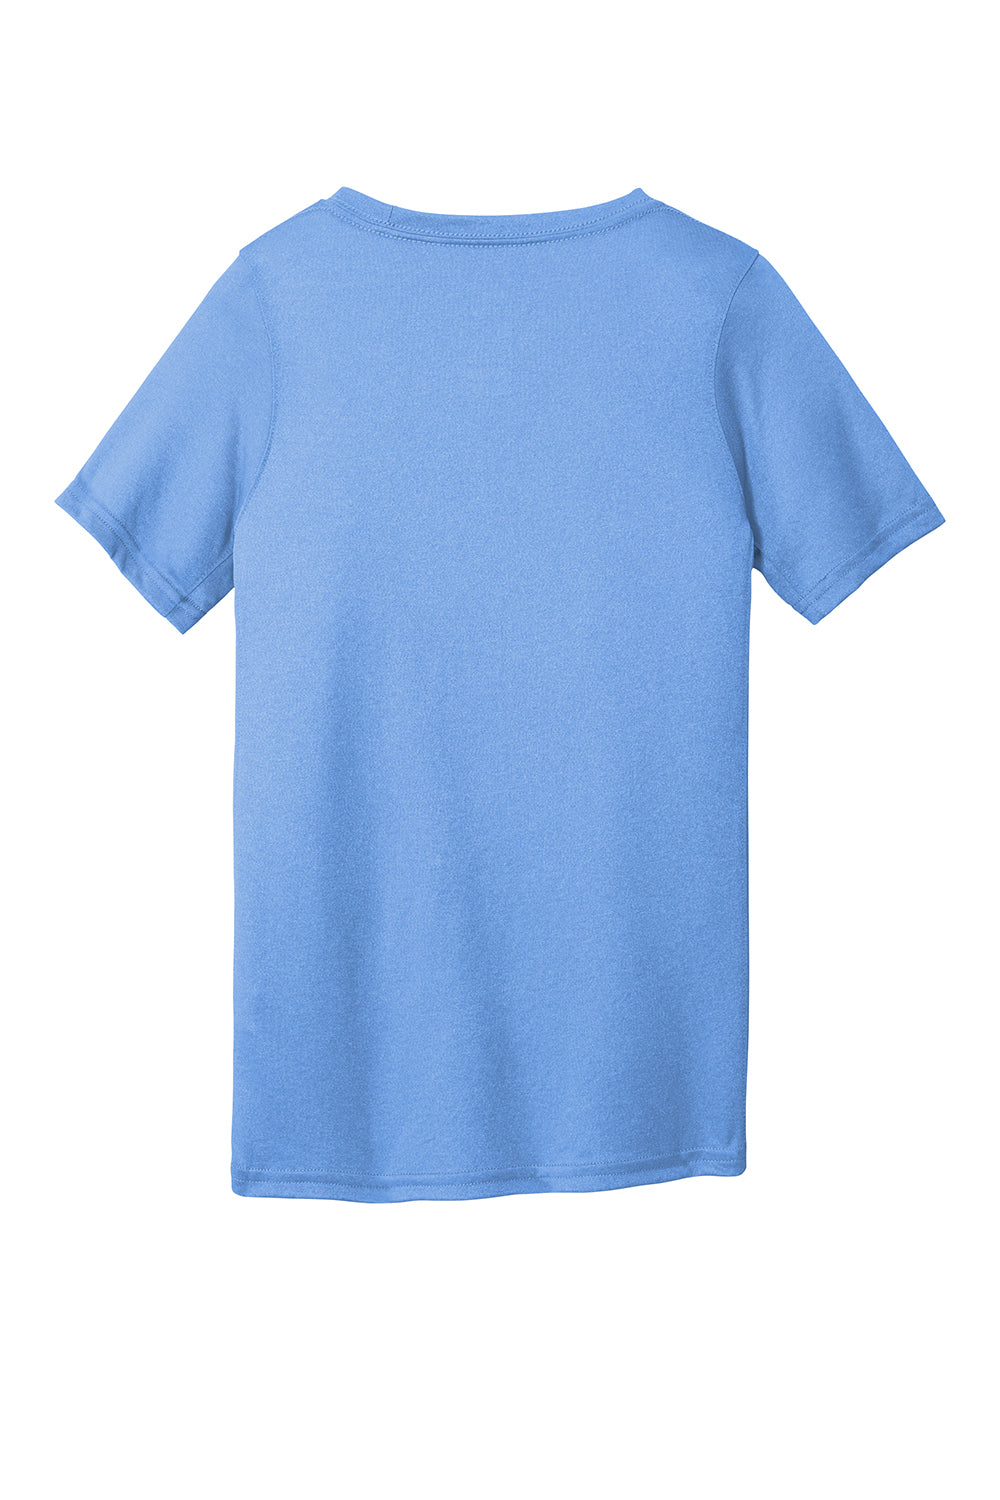 Nike DV7317 Youth Team rLegend Dri-Fit Moisure Wicking Short Sleeve Crewneck T-Shirt Valor Blue Flat Back